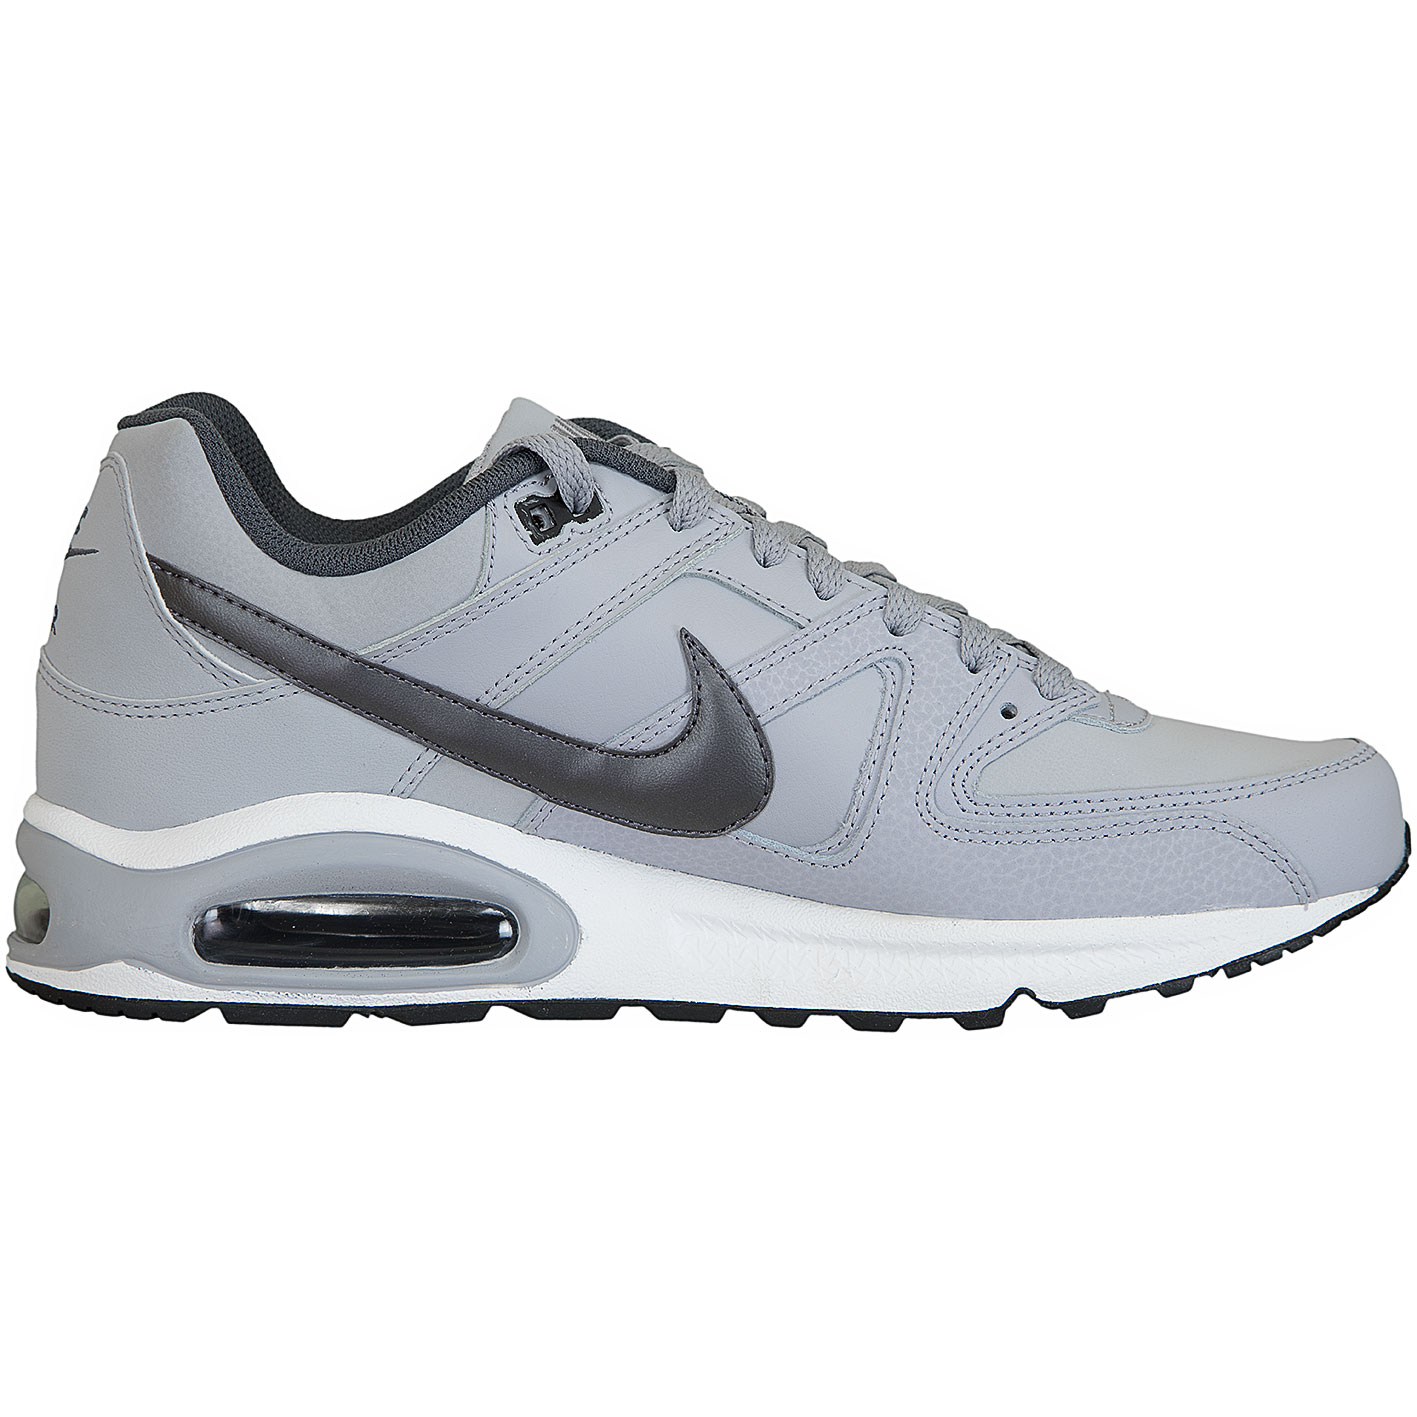 ☆ Nike Sneaker Air Max Command Leather grau/schwarz - hier bestellen!